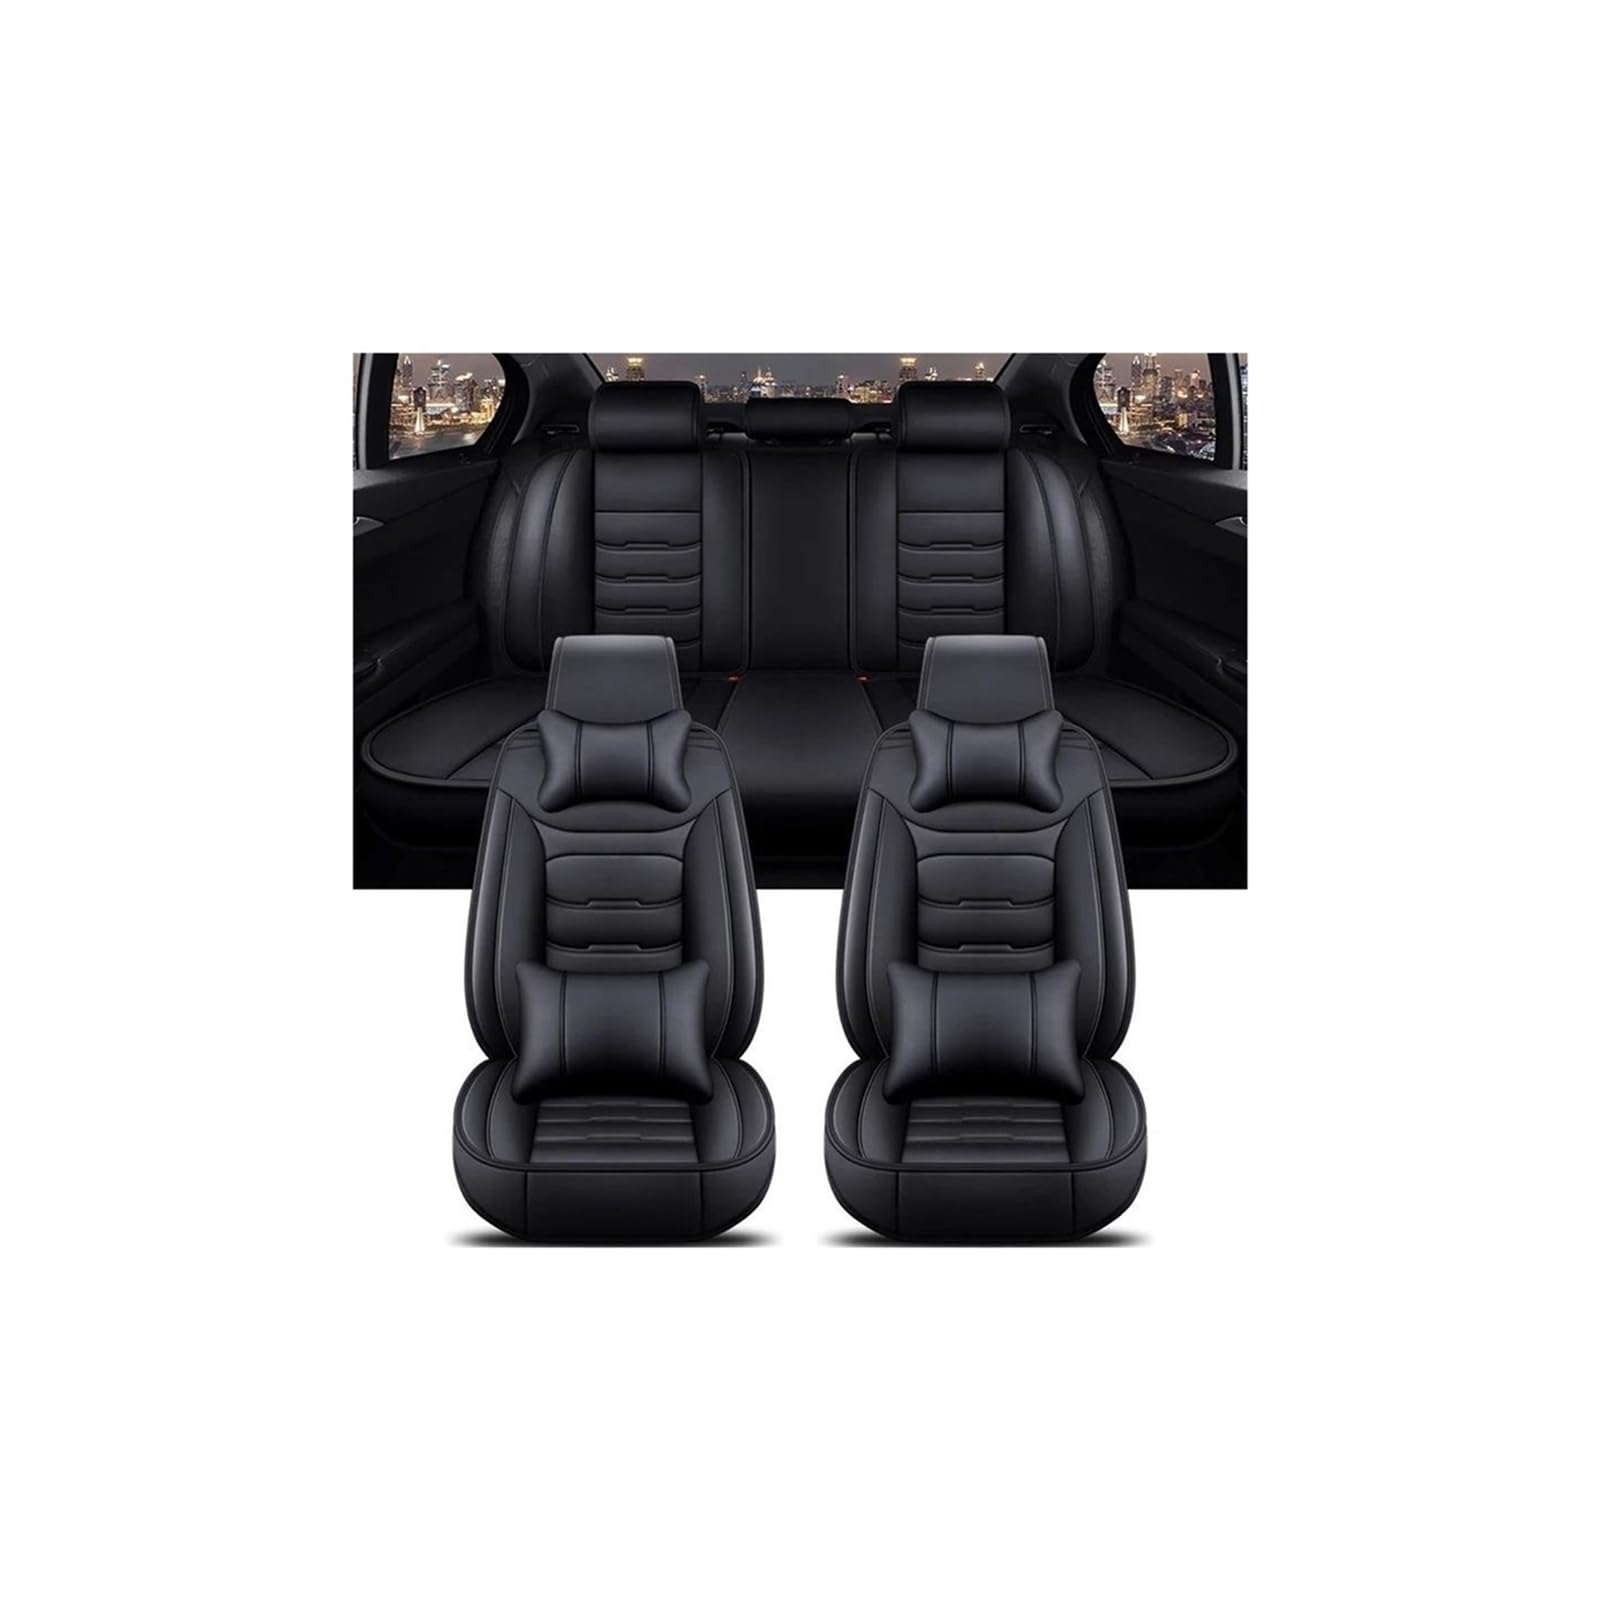 YIJIAVSX Auto-Sitzbezüge Auto-Sitzbodenschutzmatte Für Mercedes C-Klasse W202 W203 W204 W205 A205 C204 C205 S202 S203 S204 S205 Rücksitzbezüge(7) von YIJIAVSX